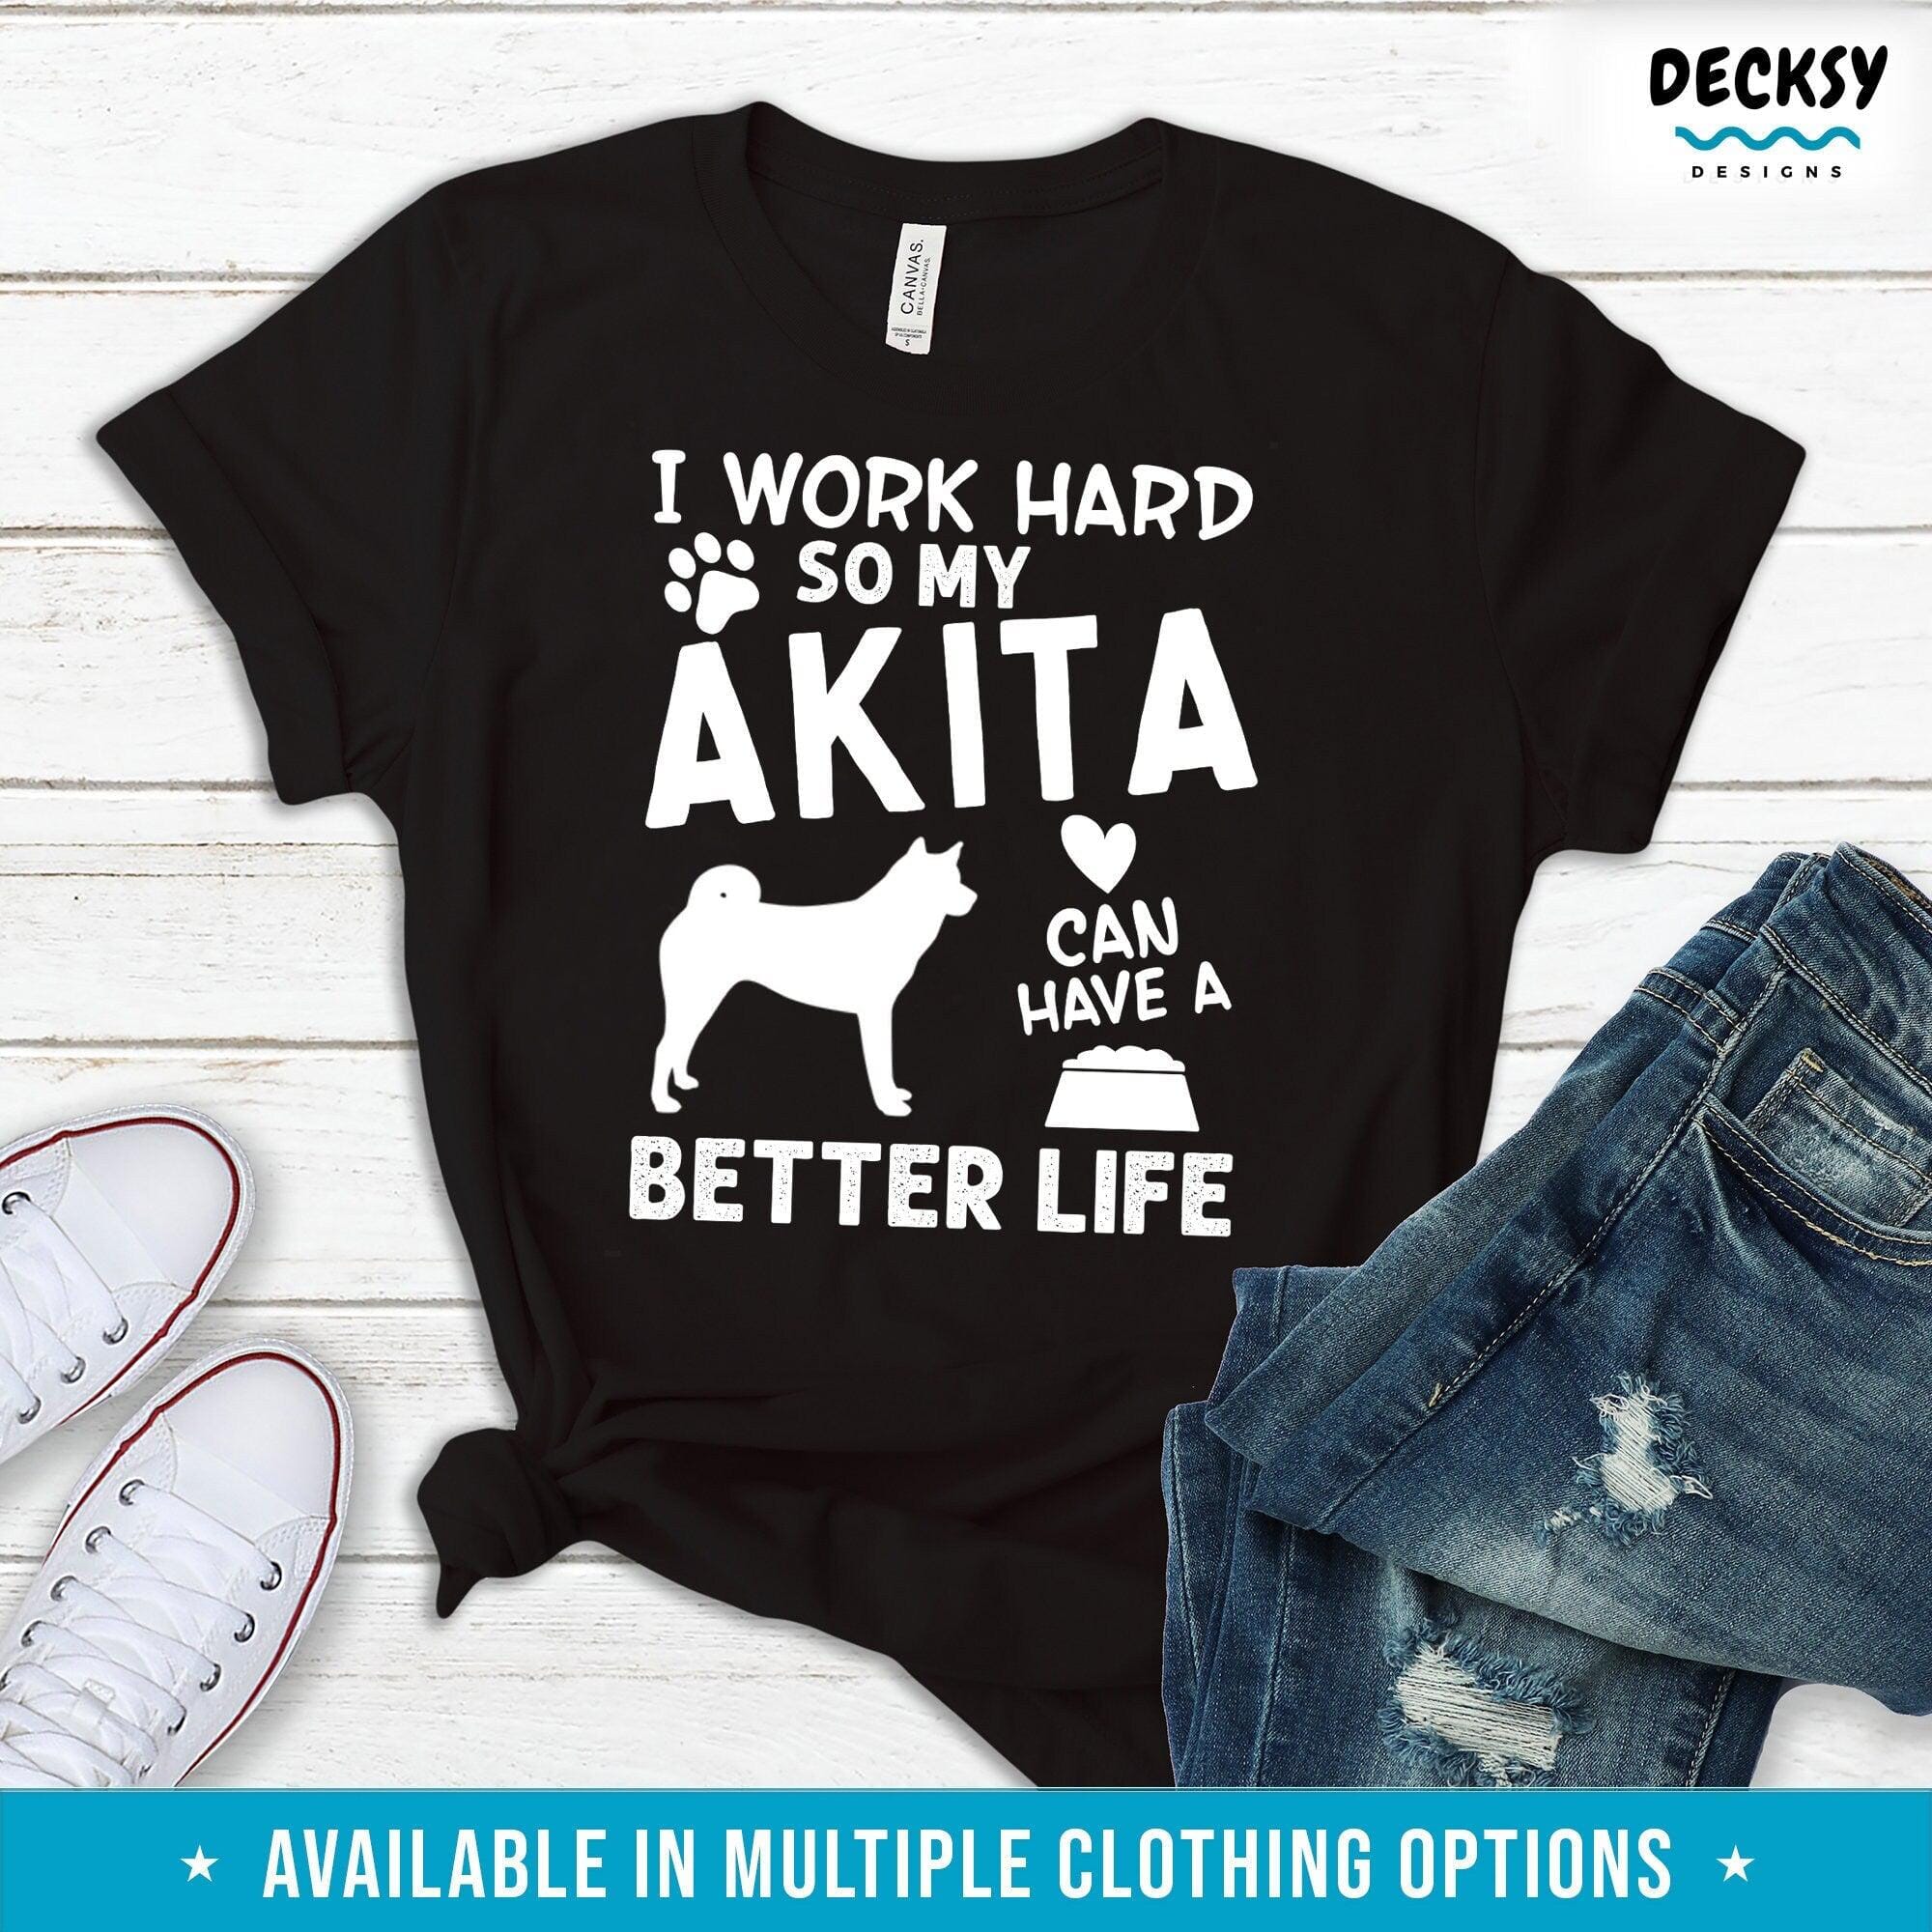 Akita Dog Shirt, Dog Lover Gift-Clothing:Gender-Neutral Adult Clothing:Tops & Tees:T-shirts:Graphic Tees-DecksyDesigns